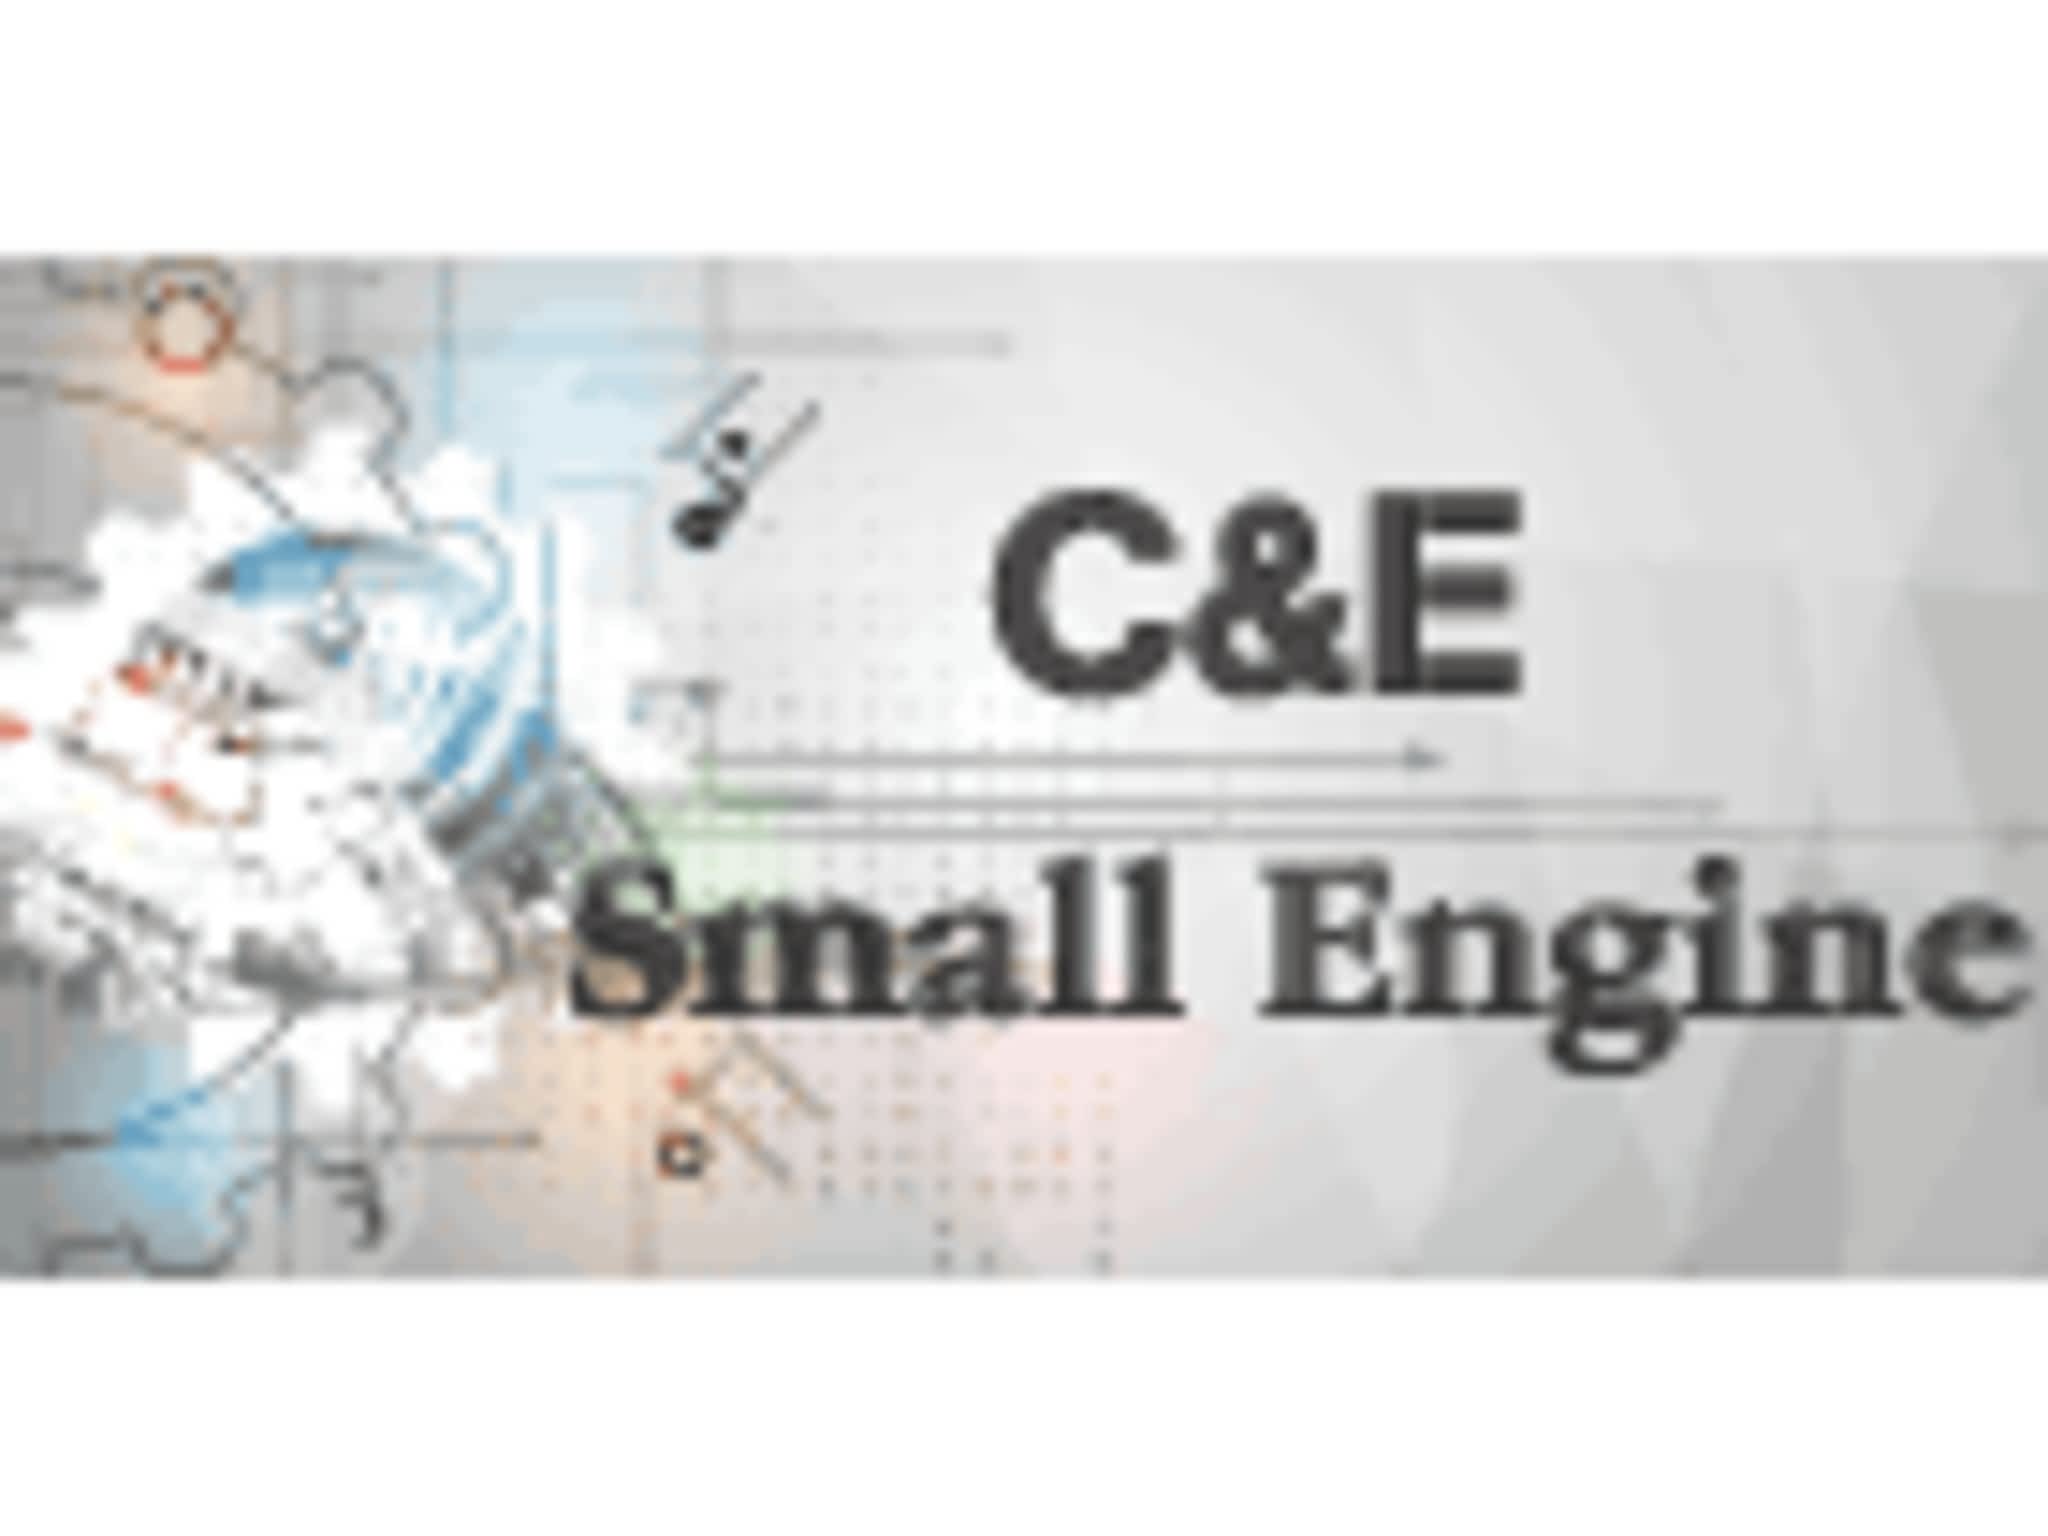 photo C&E Small Engine